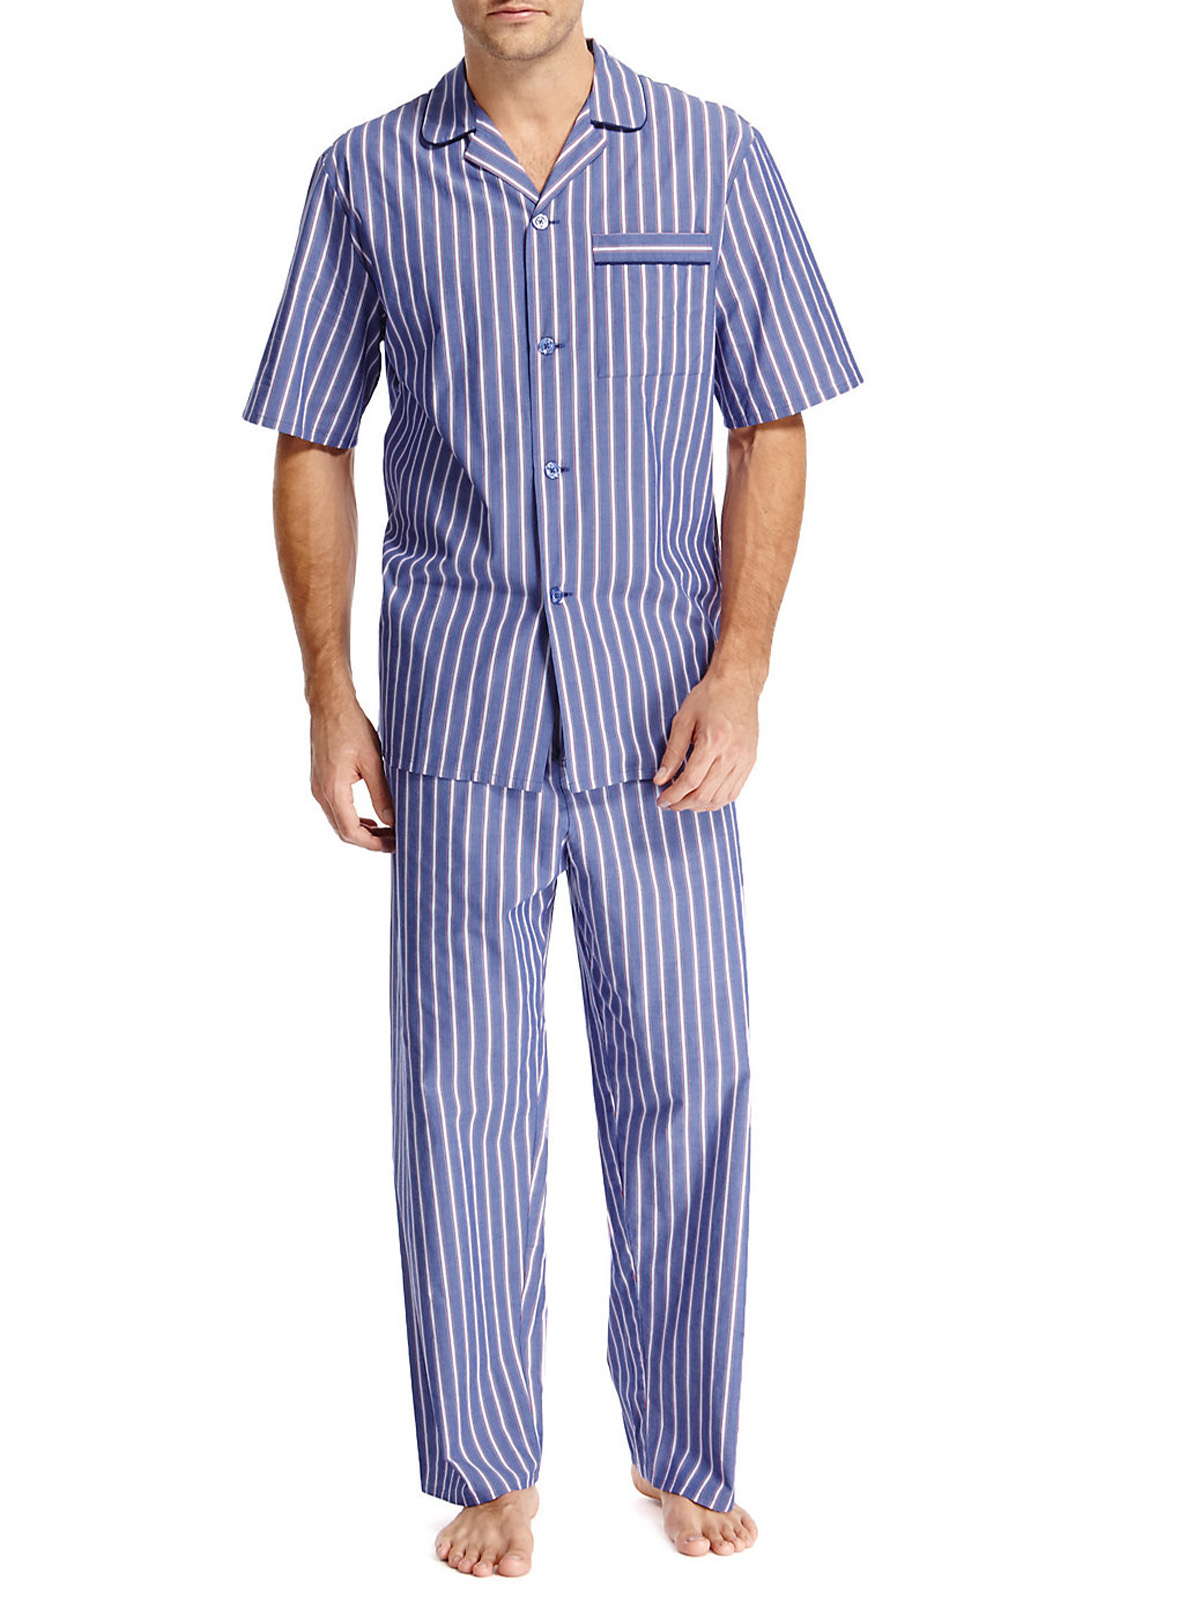 Marks and Spencer - - M&5 BLUE Mens Cotton Blend Striped Pyjamas - Size ...